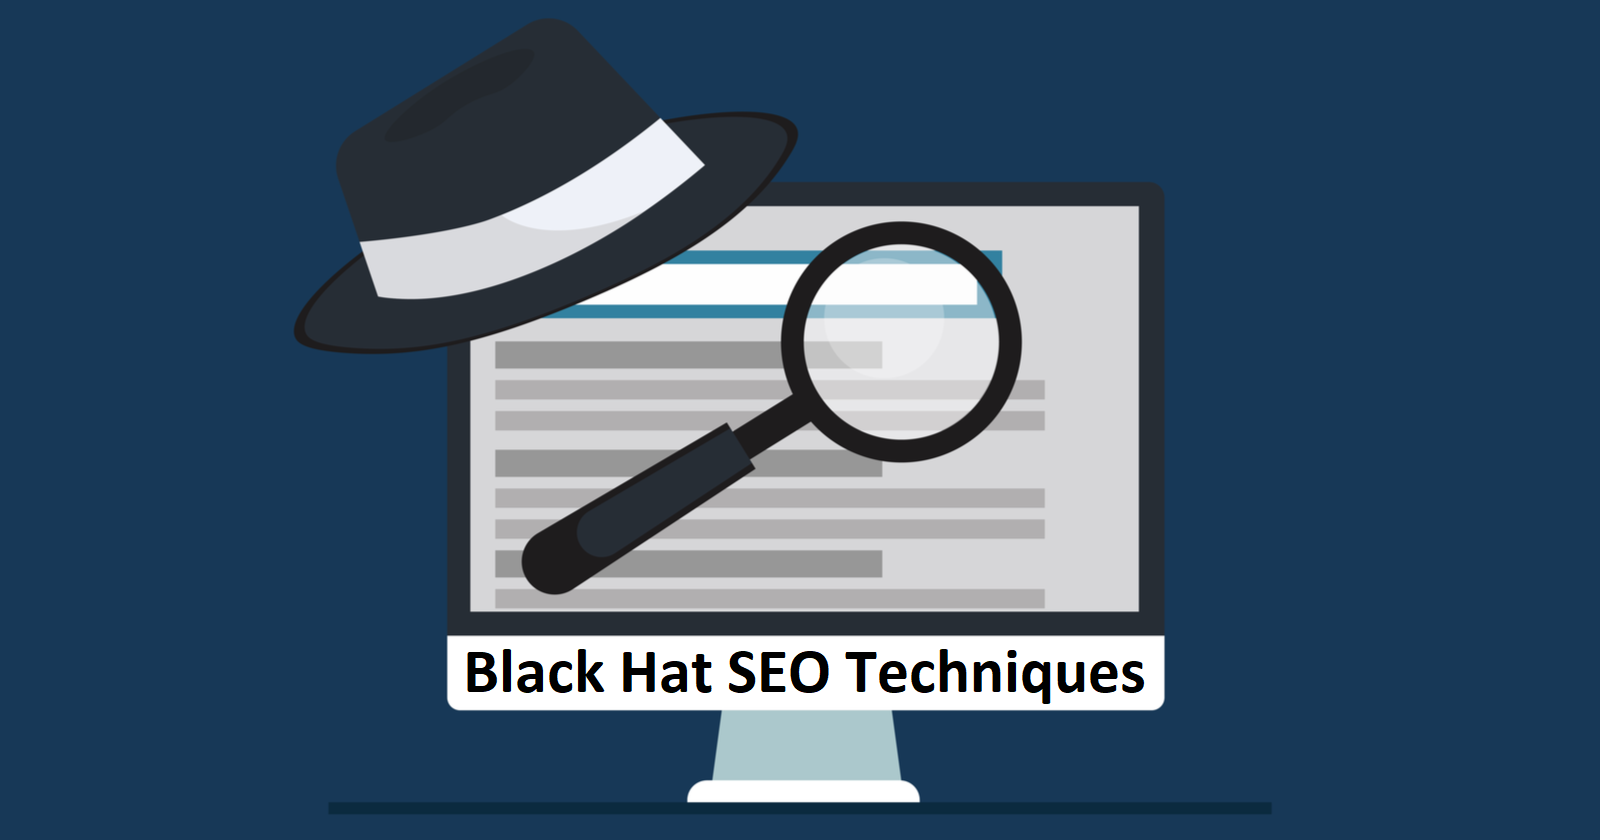 What are Black Hat SEO techniques? 